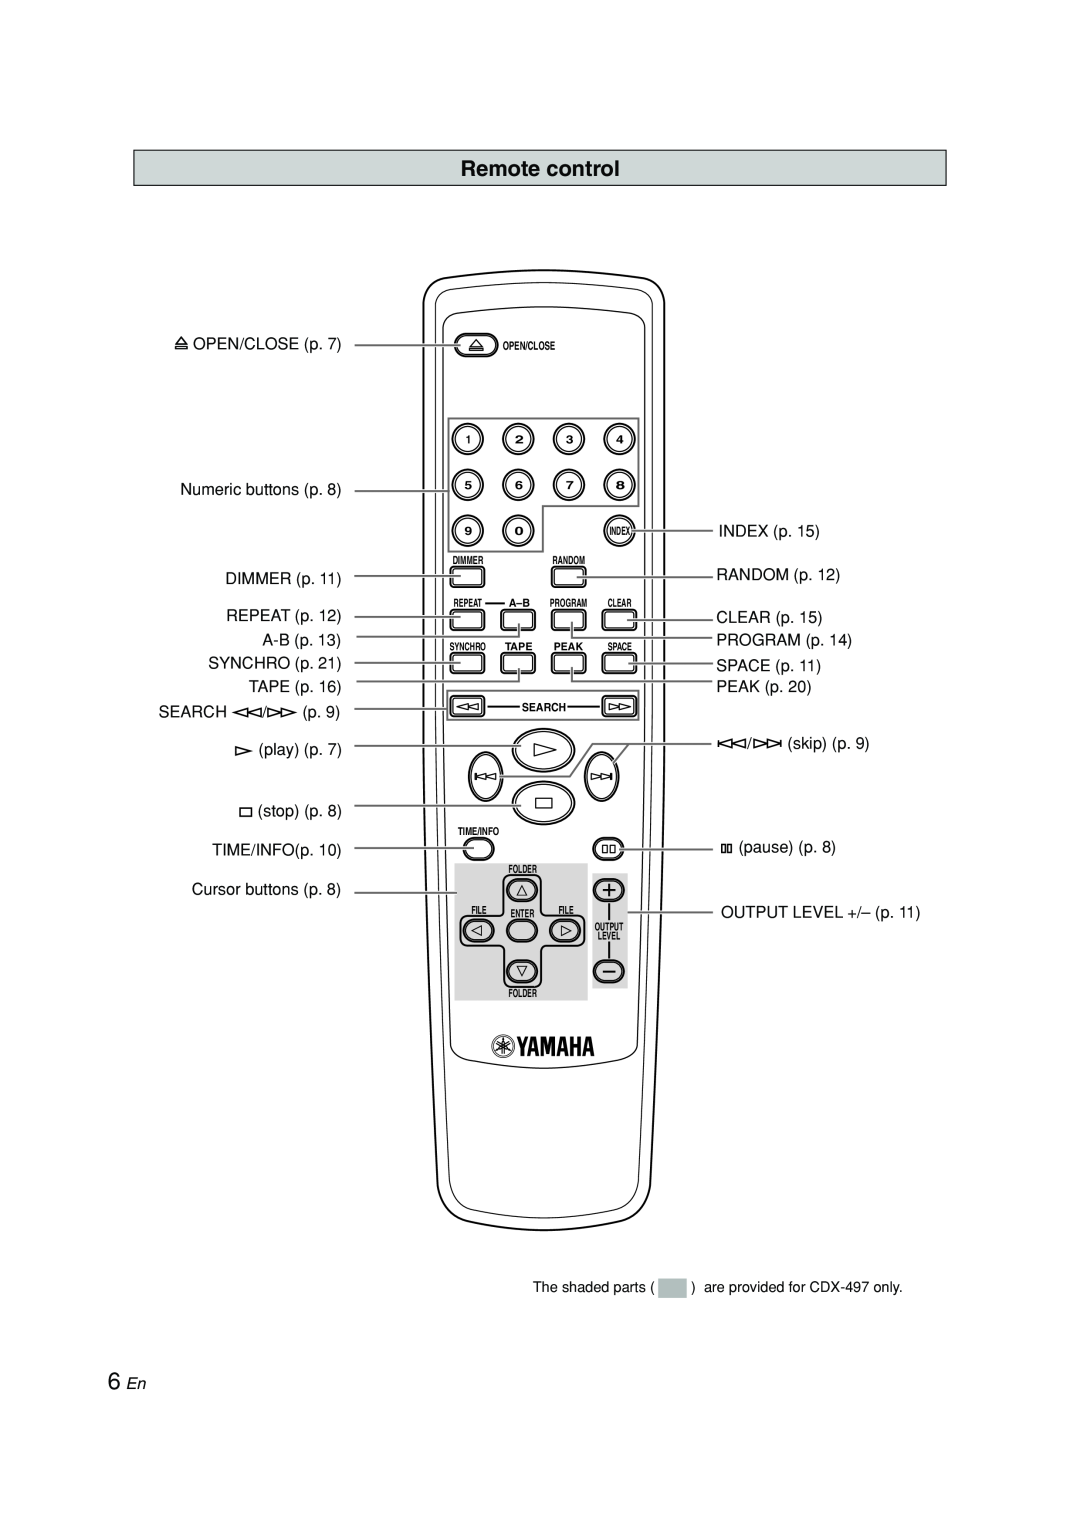 Yamaha CDX-397, CDX-97 owner manual 6 En, Remote control, INDEX p 